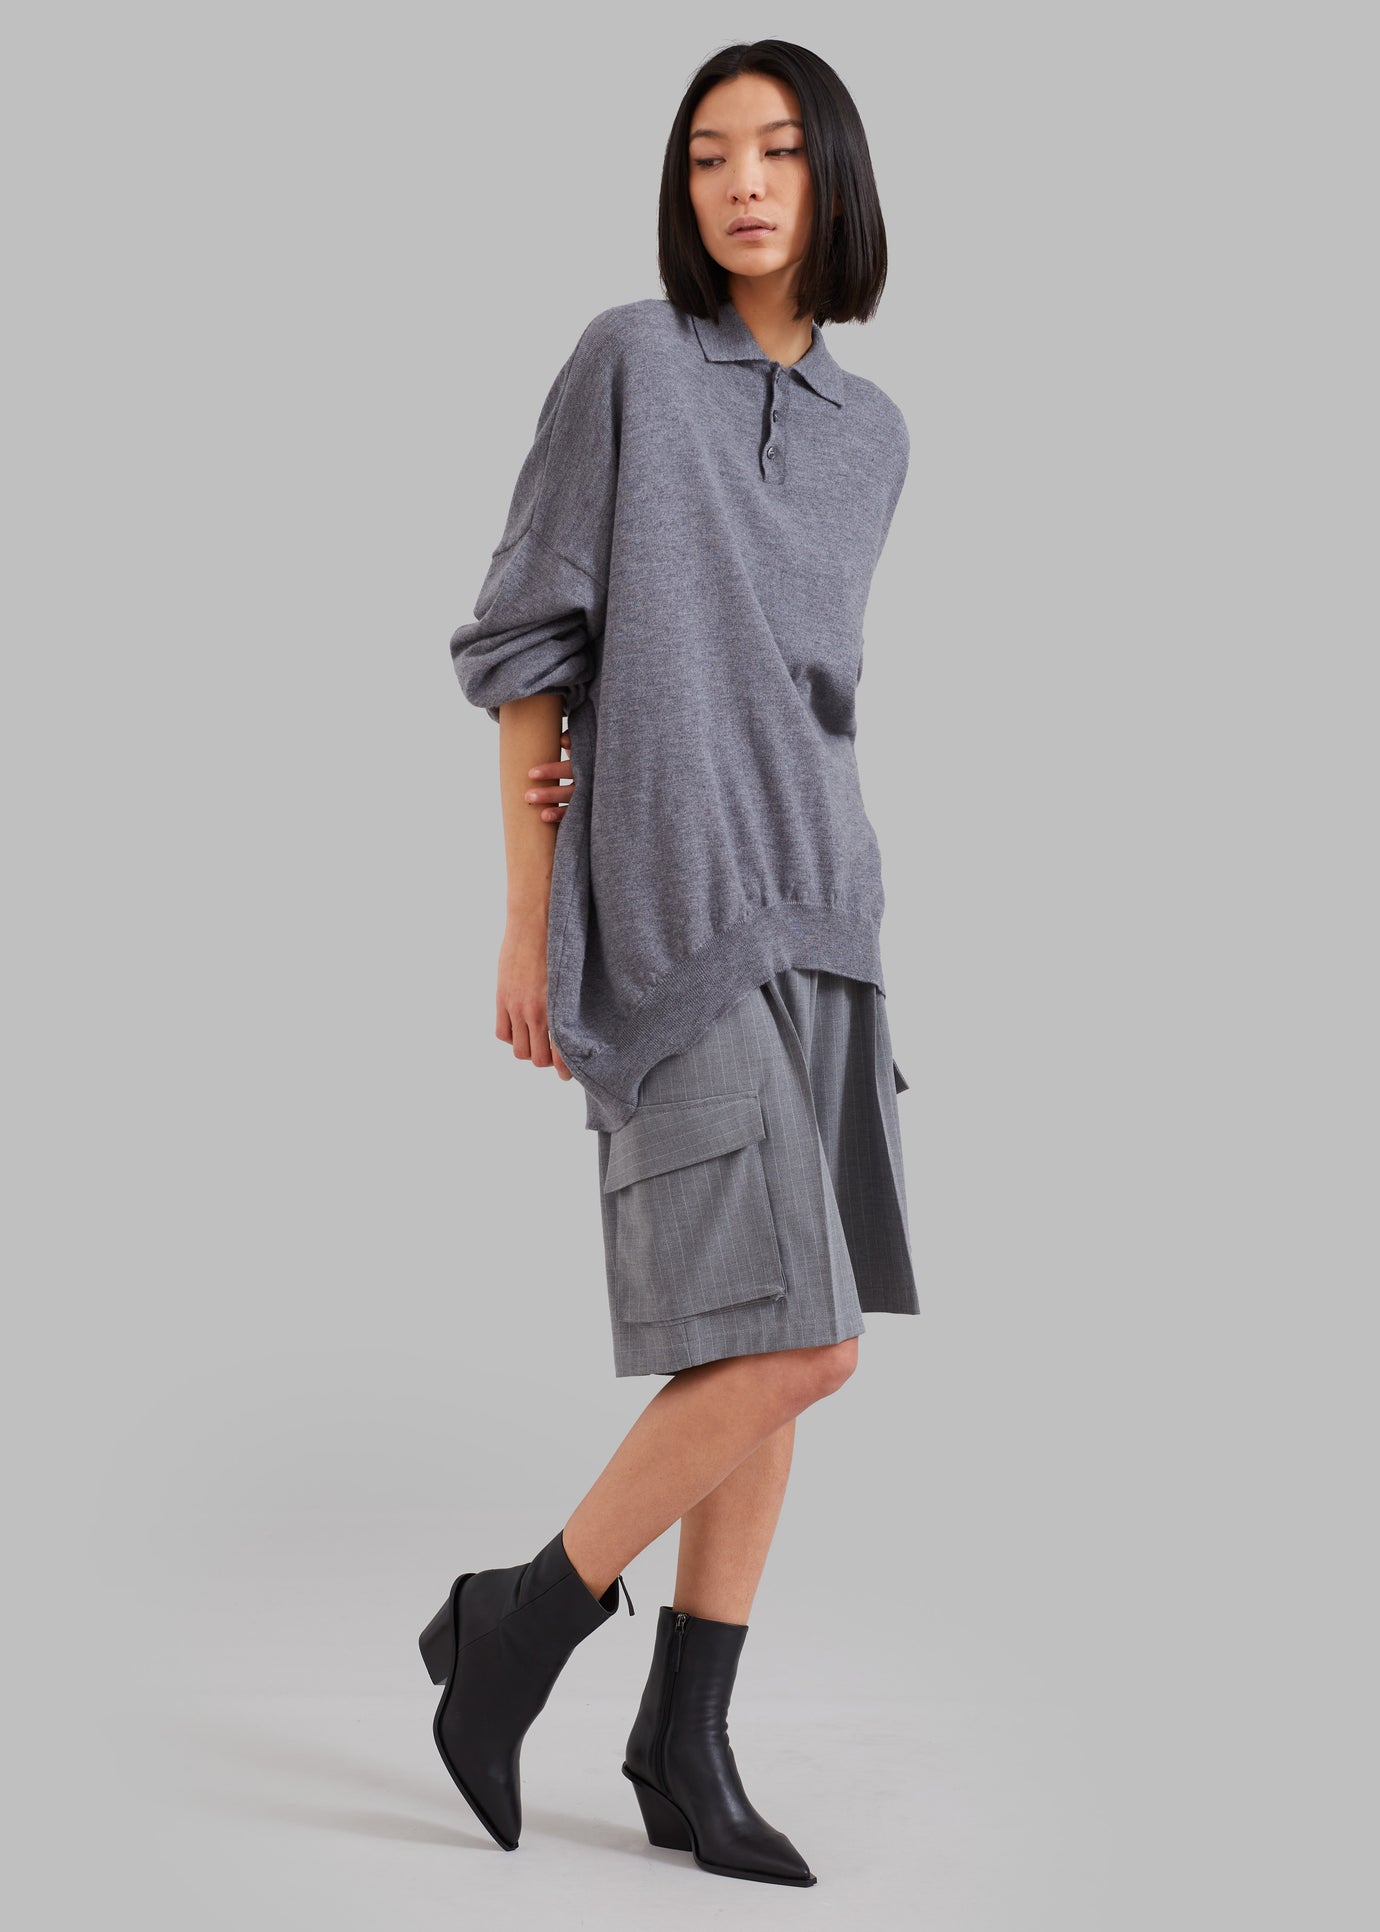 Meriel Polo Sweater - Grey